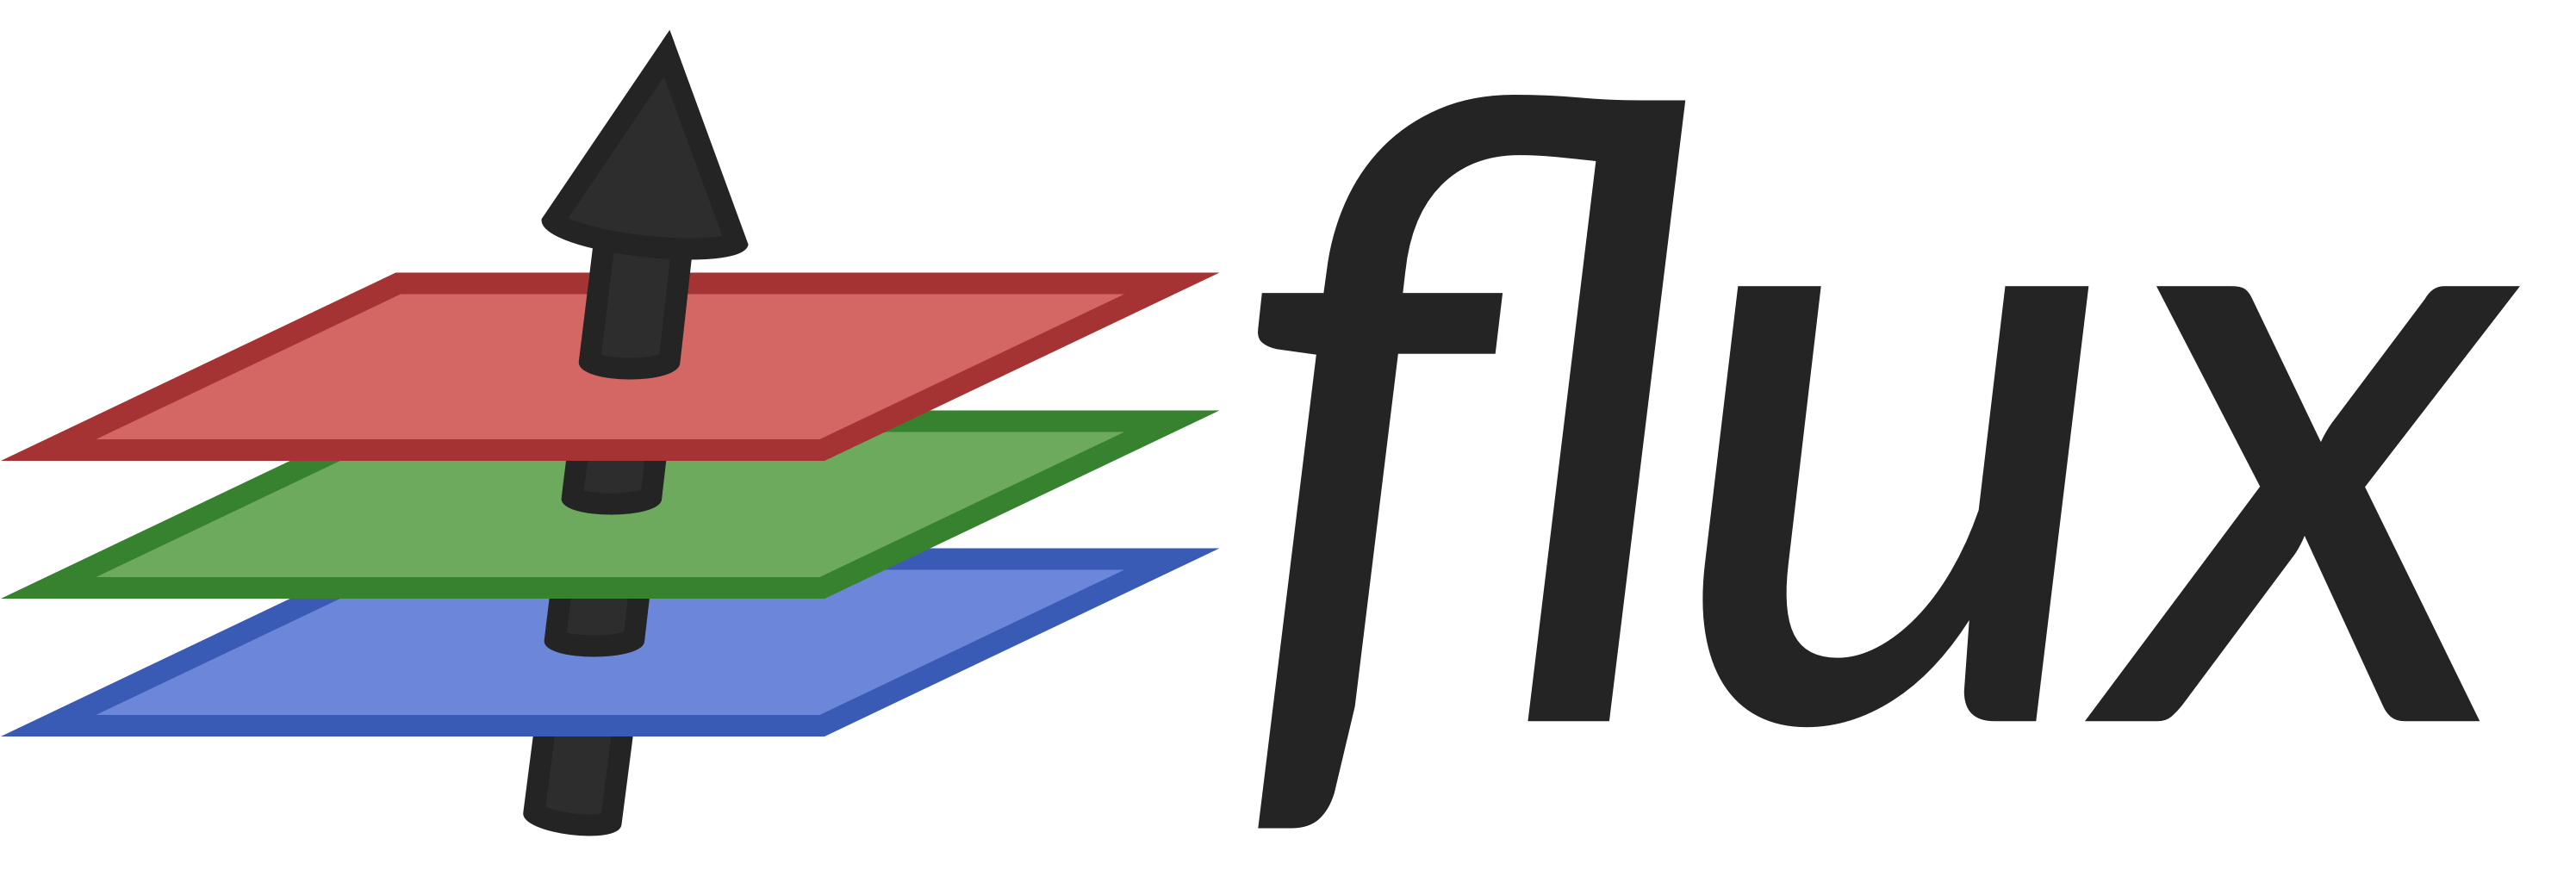 Flux Logo - Flux